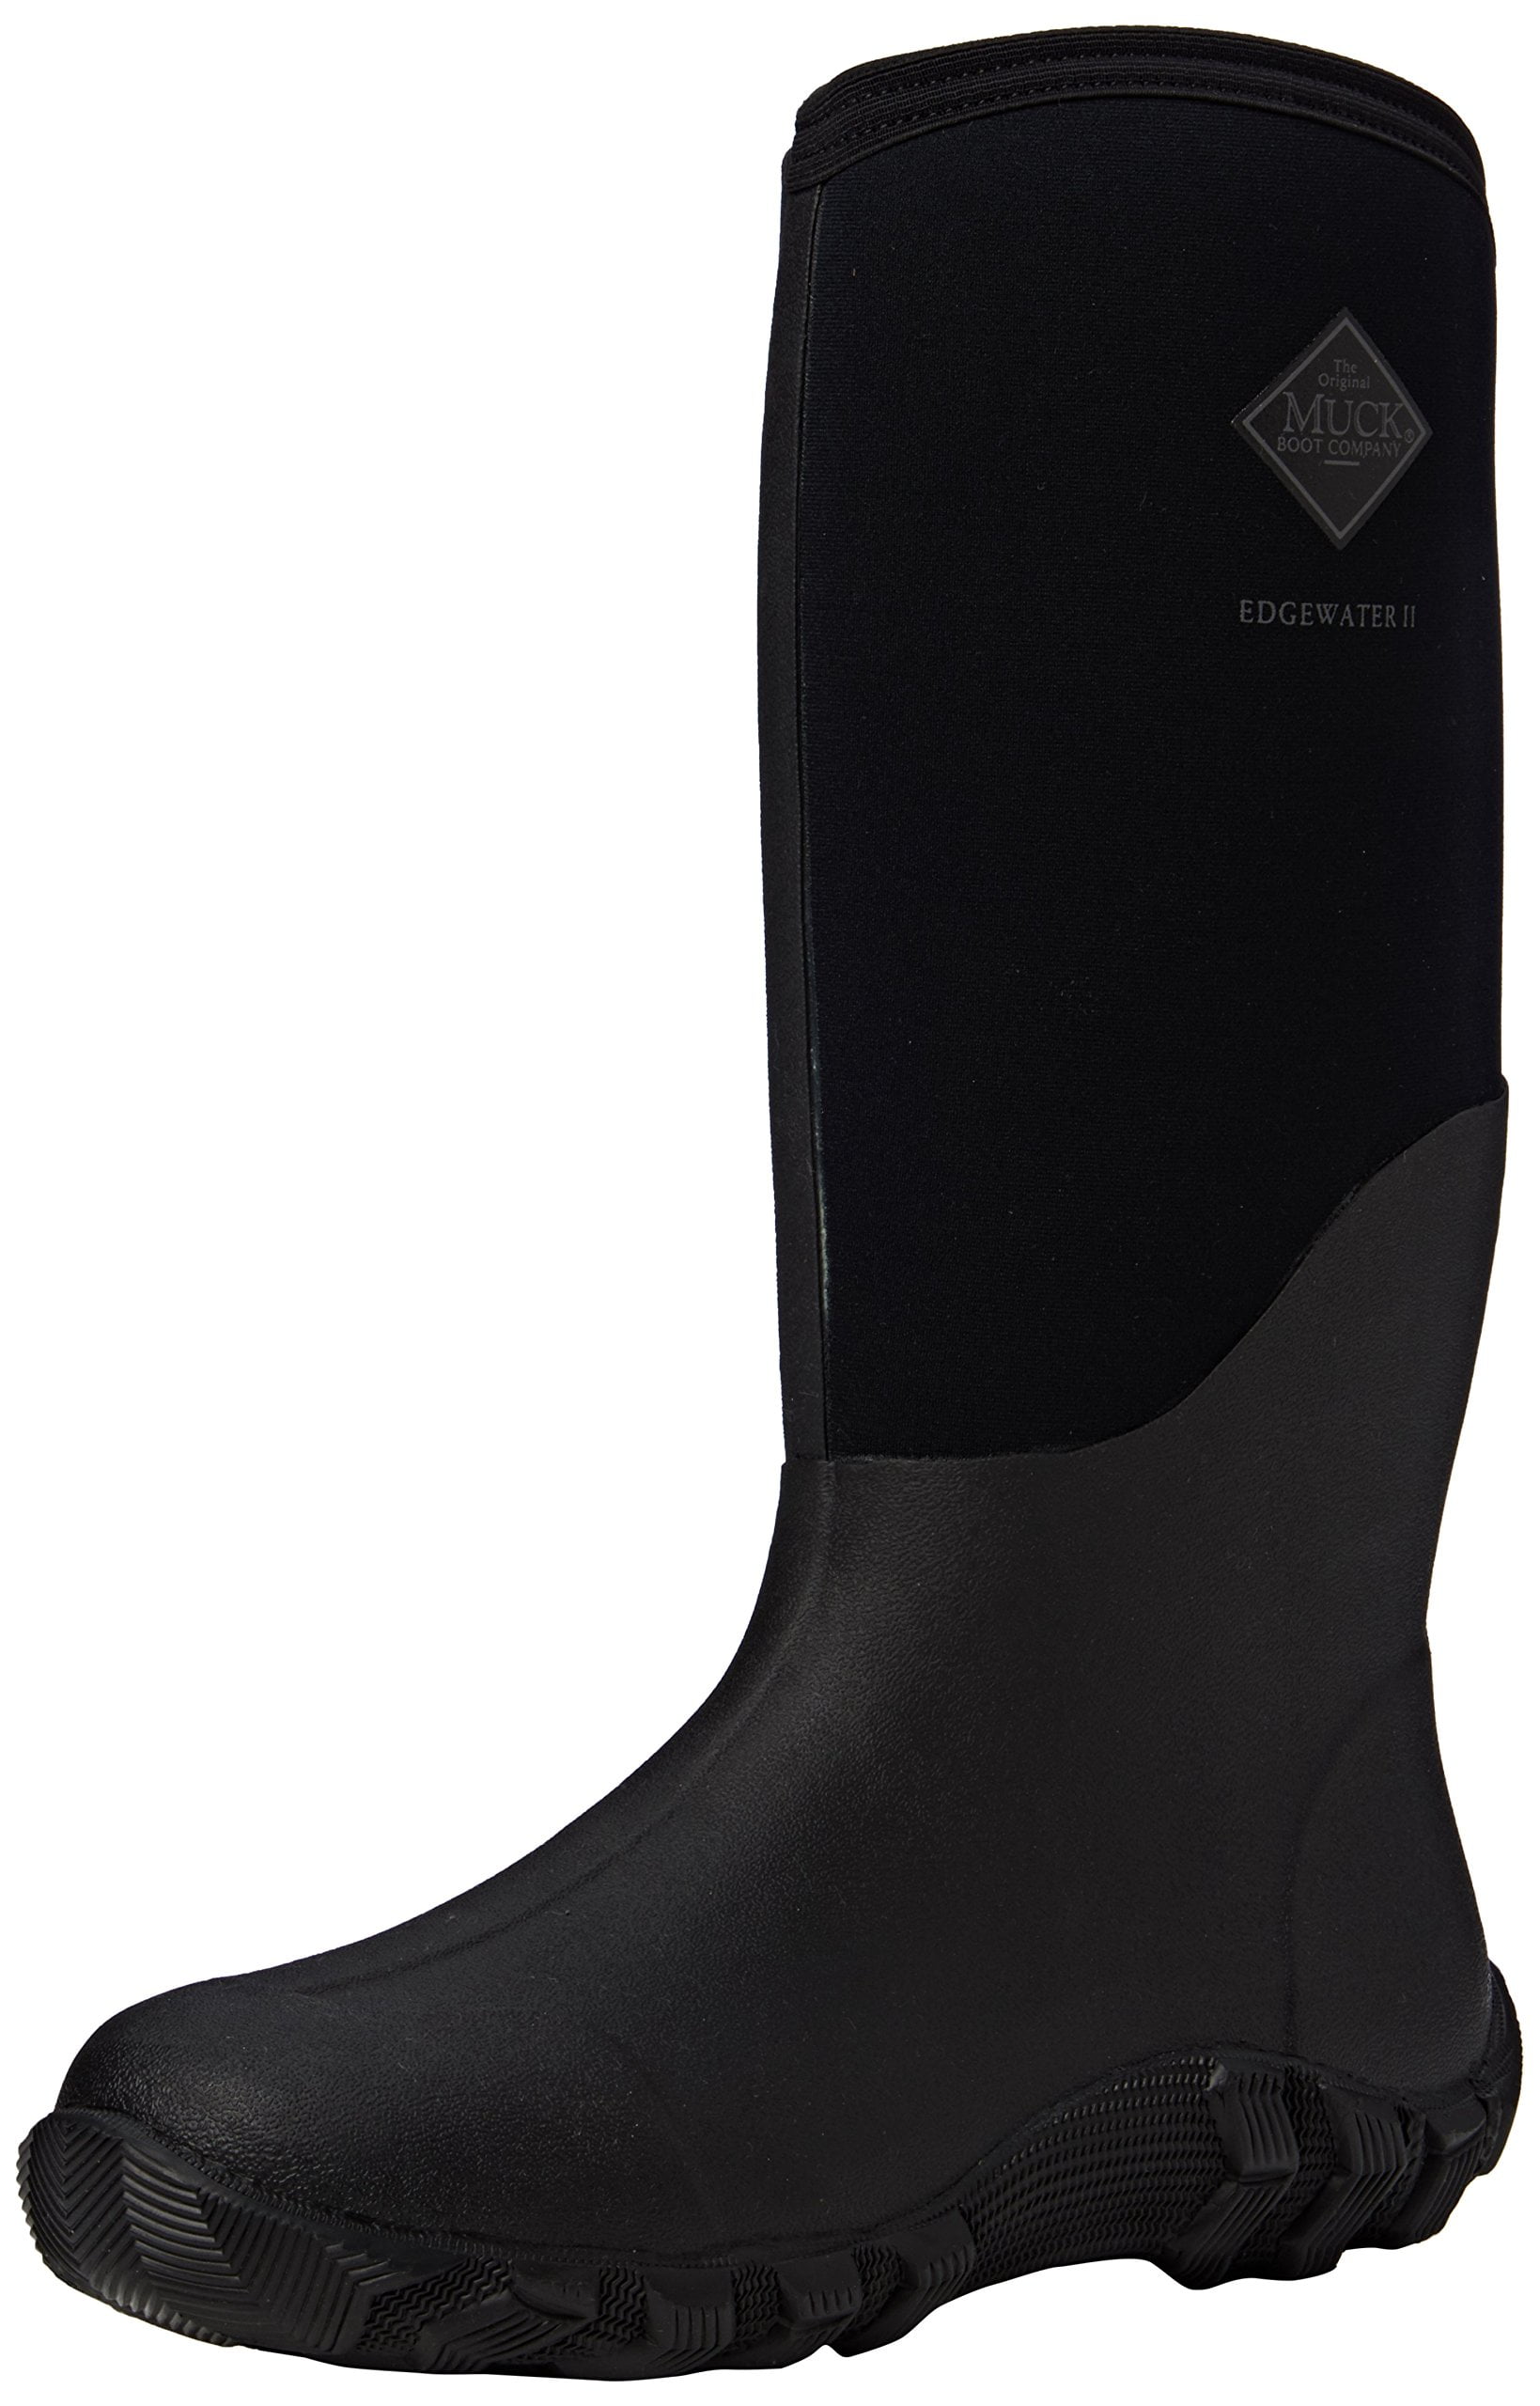 muck edgewater ll multi-purpose tall men's rubber boots - Walmart.com